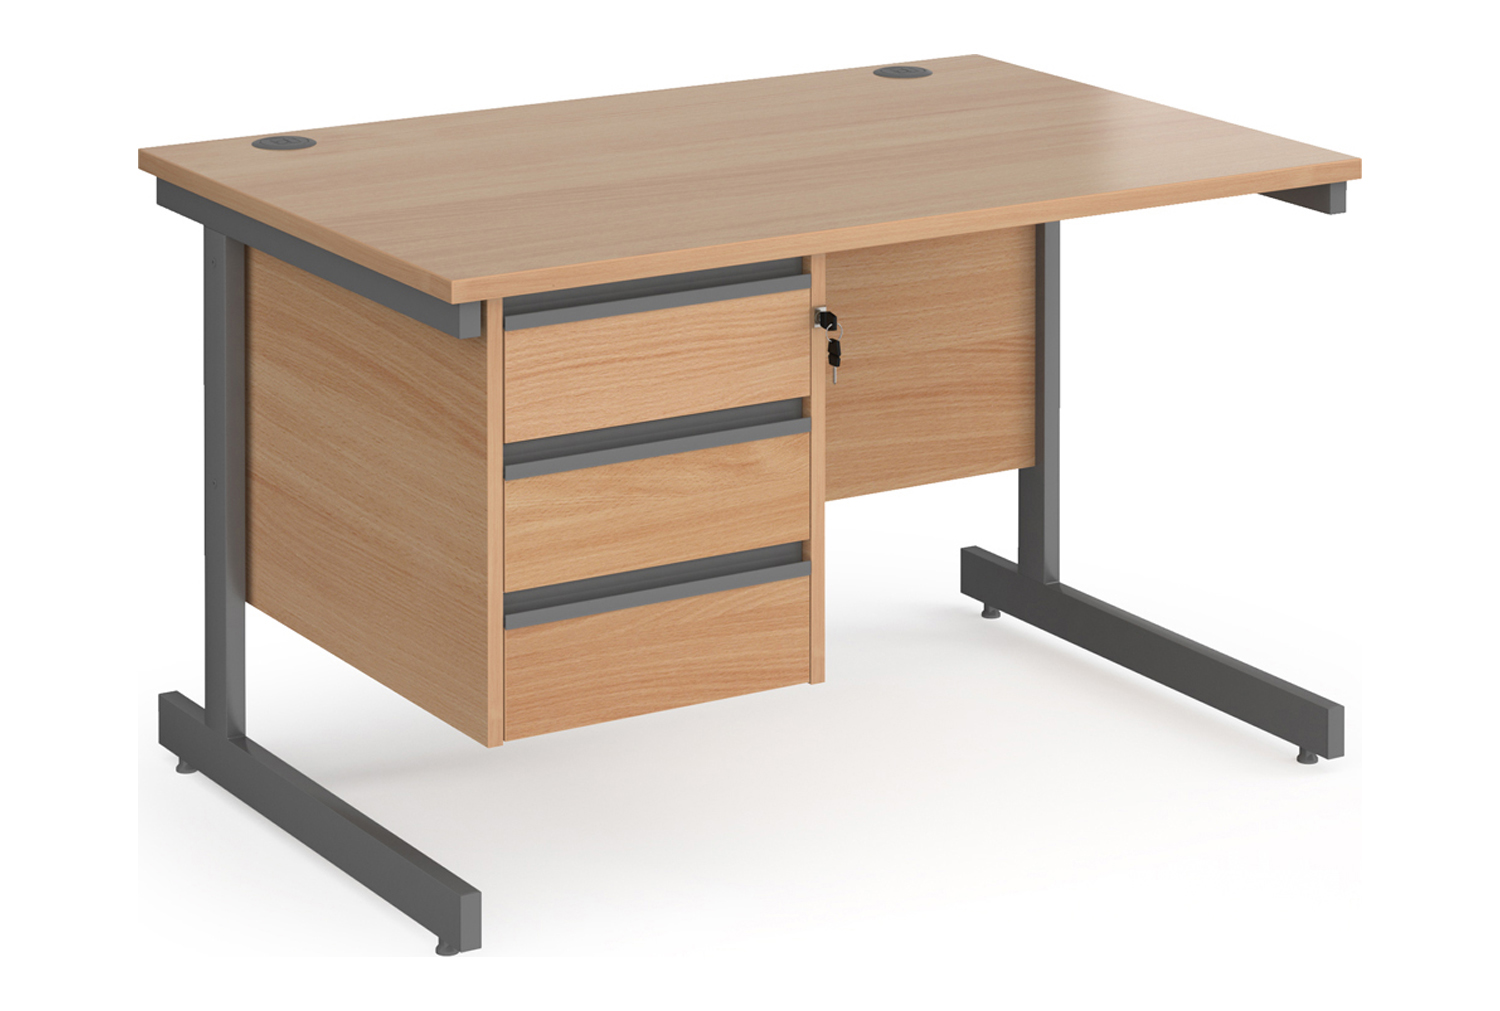 Value Line Classic+ Rectangular C-Leg Office Desk 3 Drawers (Graphite Leg), 120wx80dx73h (cm), Beech